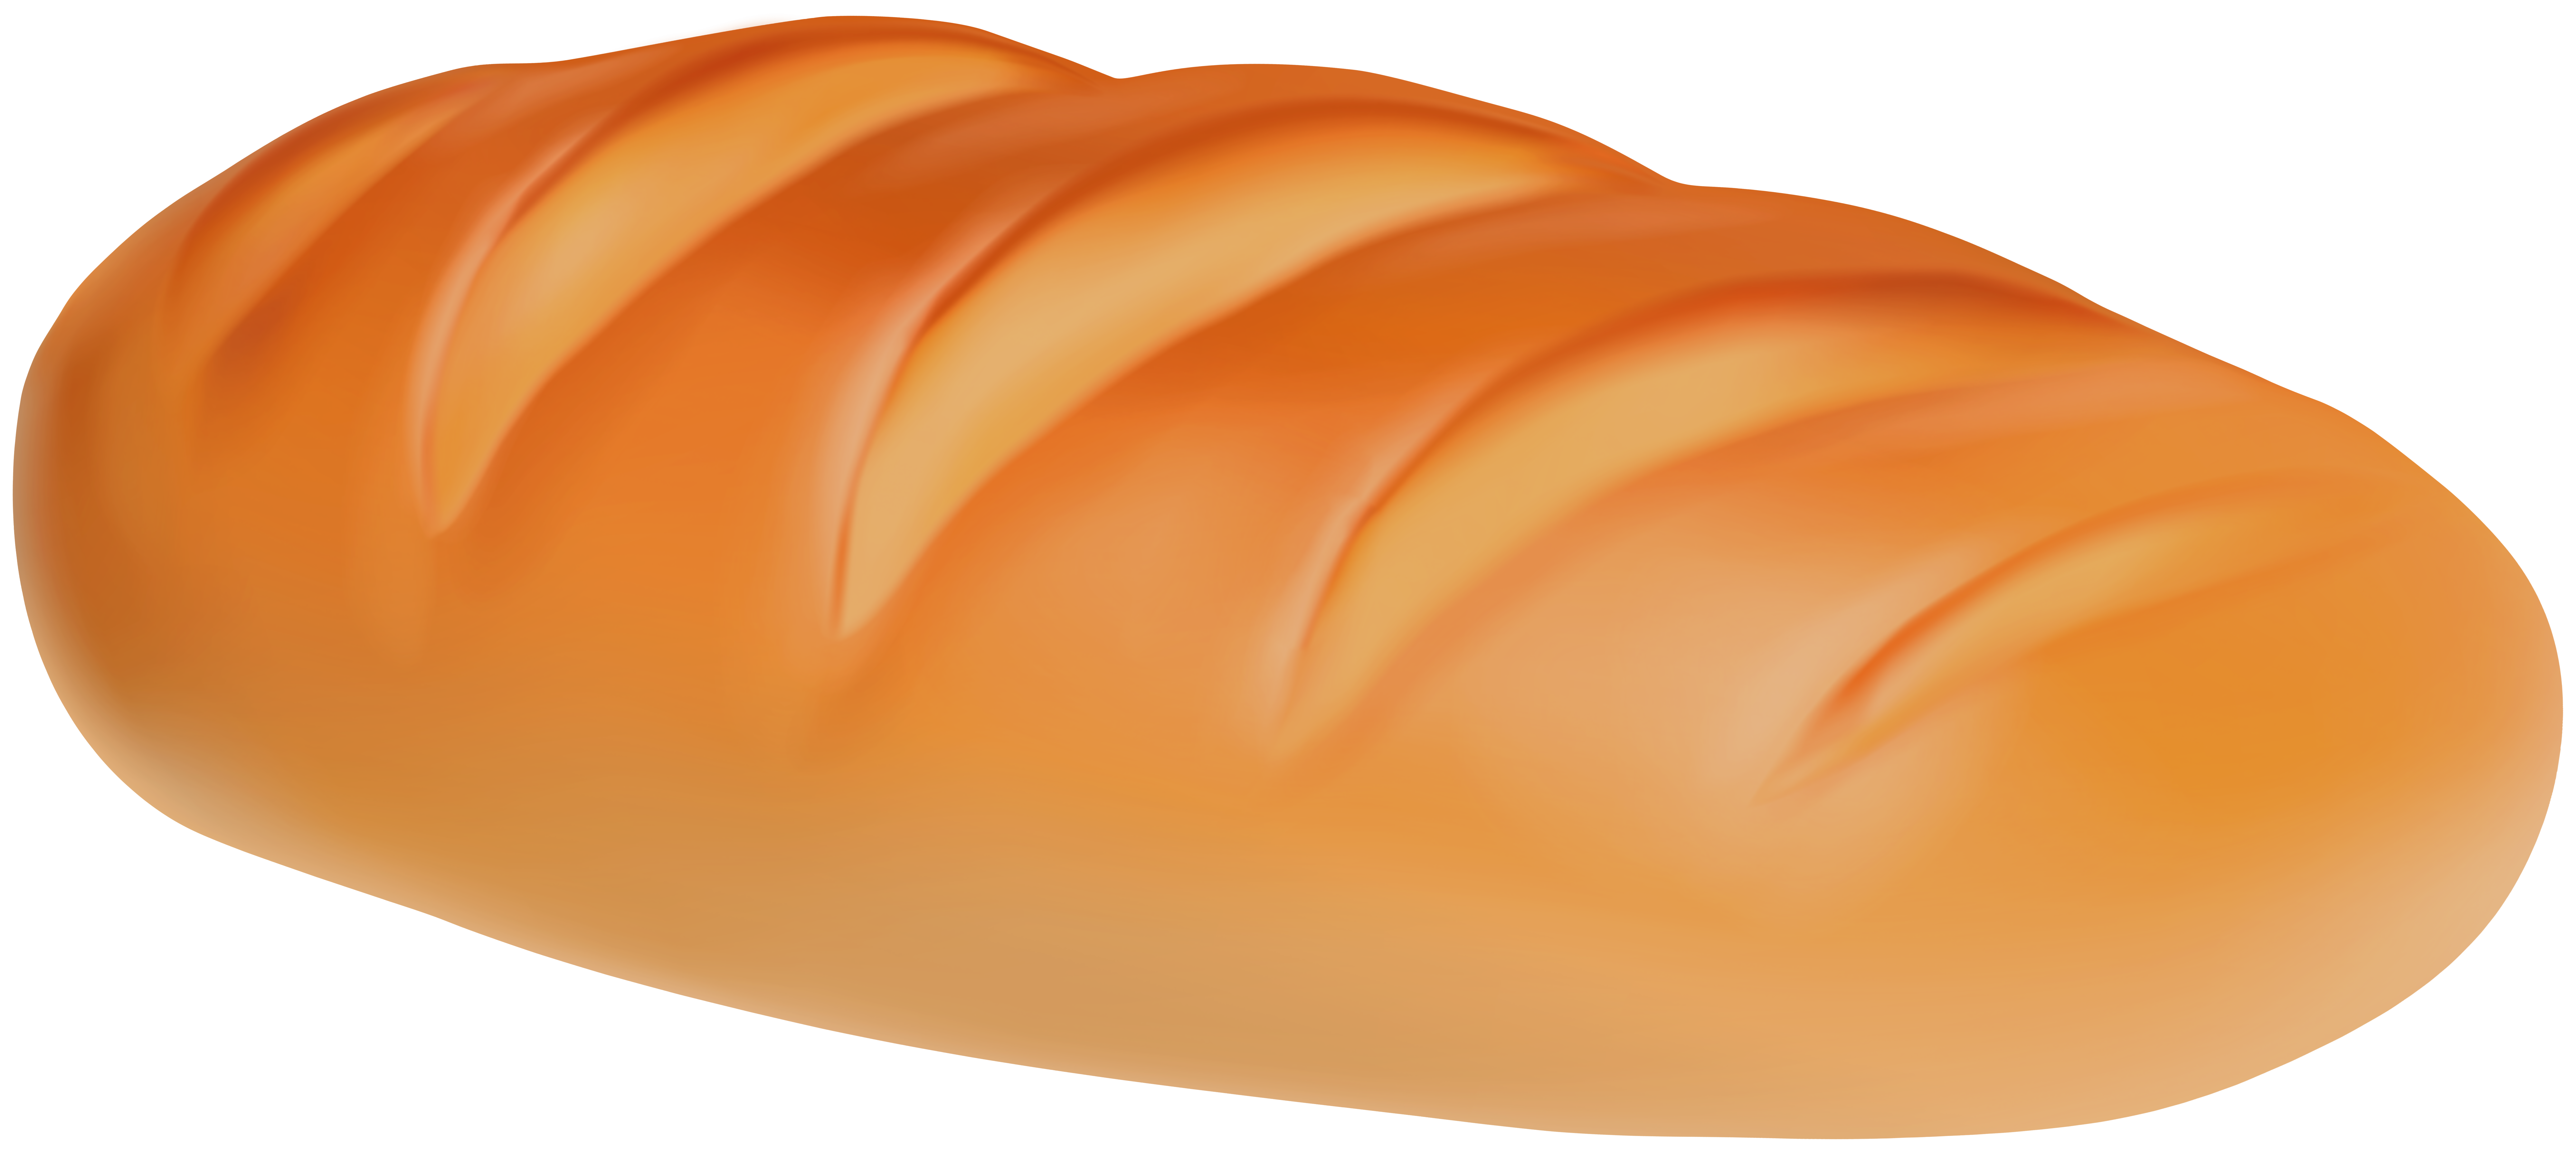 loaf clipart